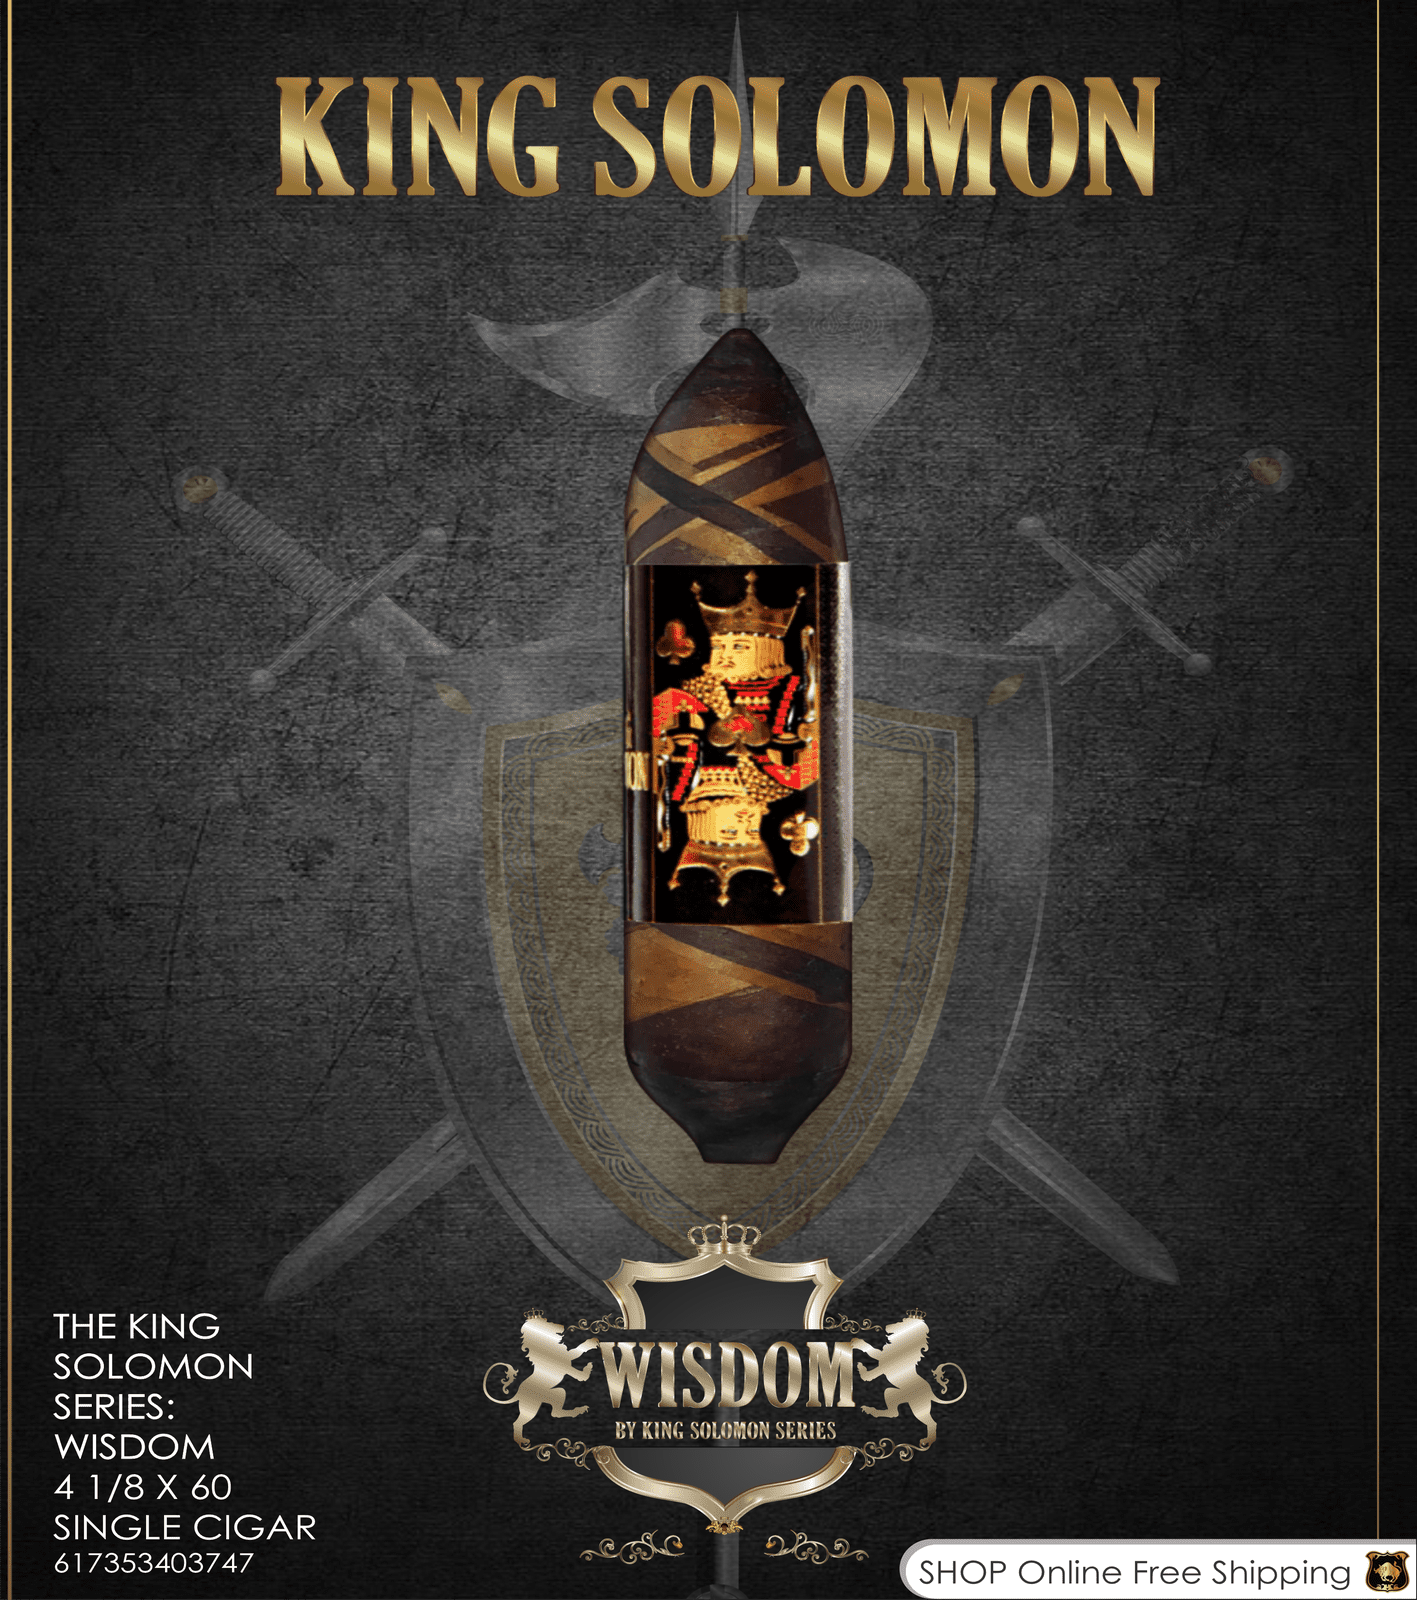 The King Solomon Series: Wisdom 4 1/8 x 60 - Single Cigar